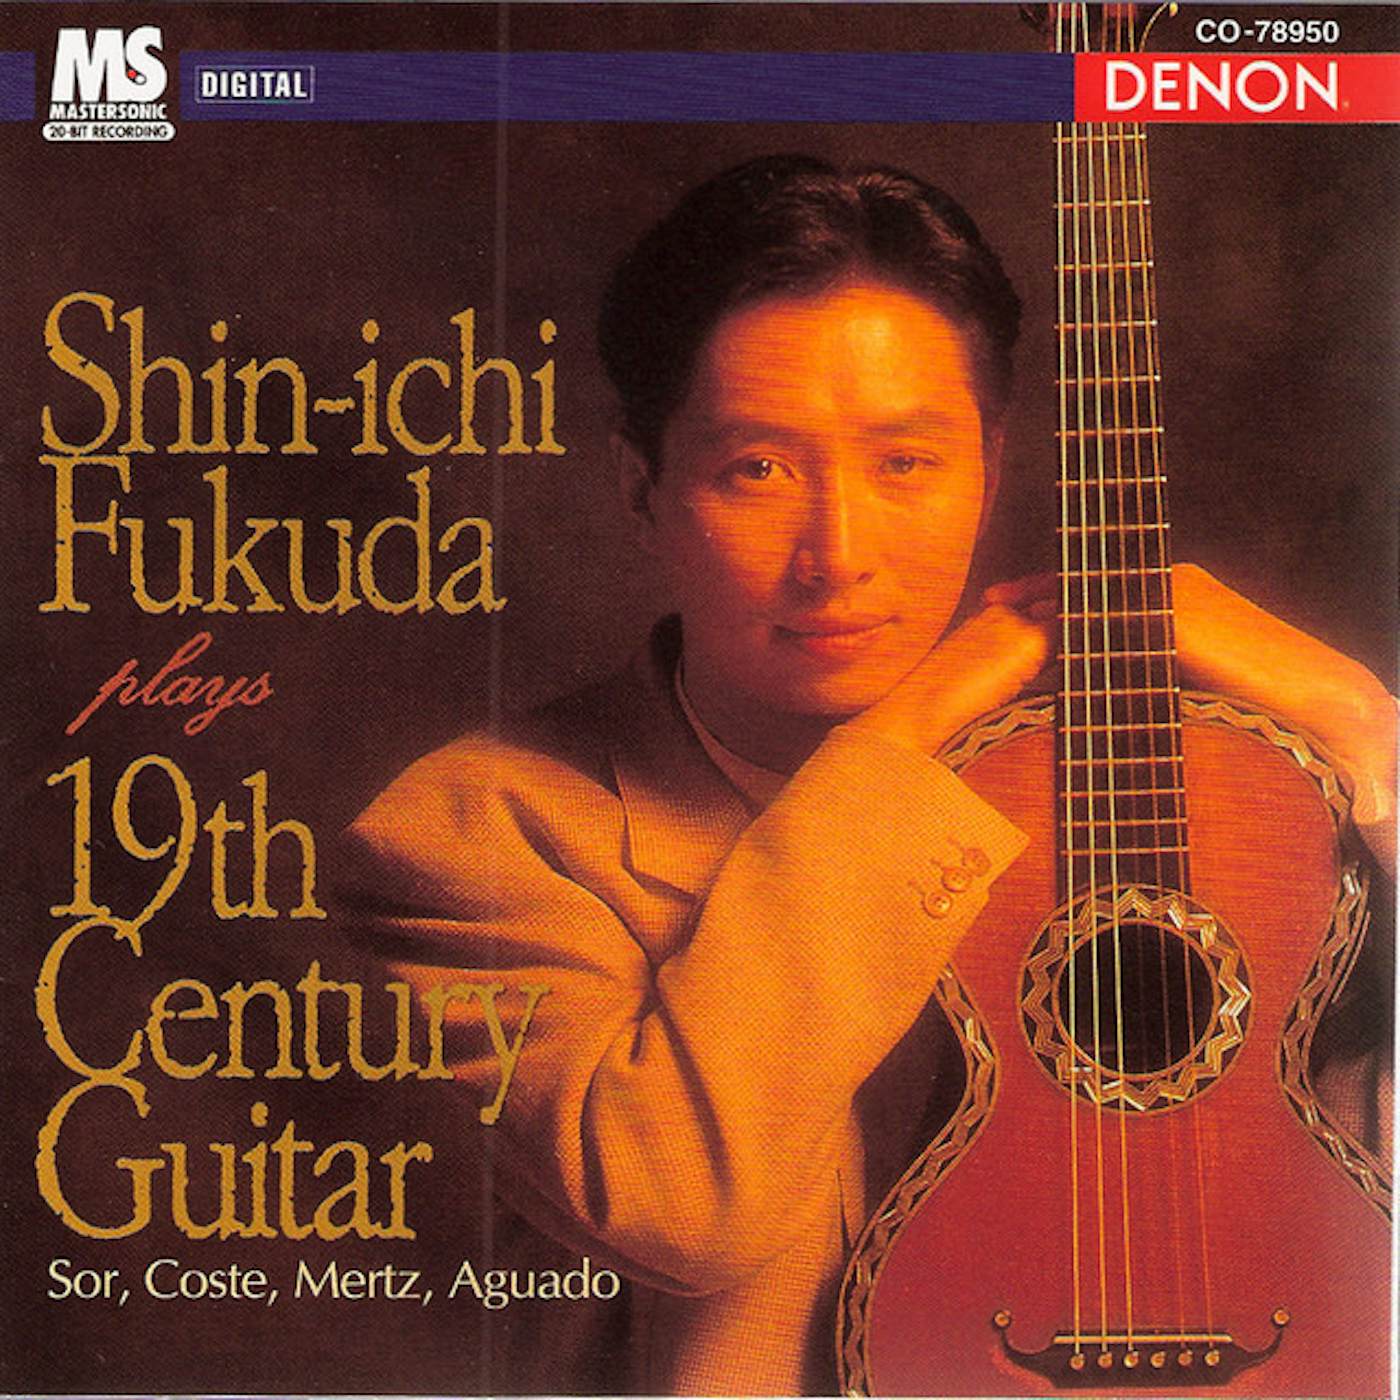 Shin-ichi Fukuda PLAYS 19TH CENTURY GUITAR CD